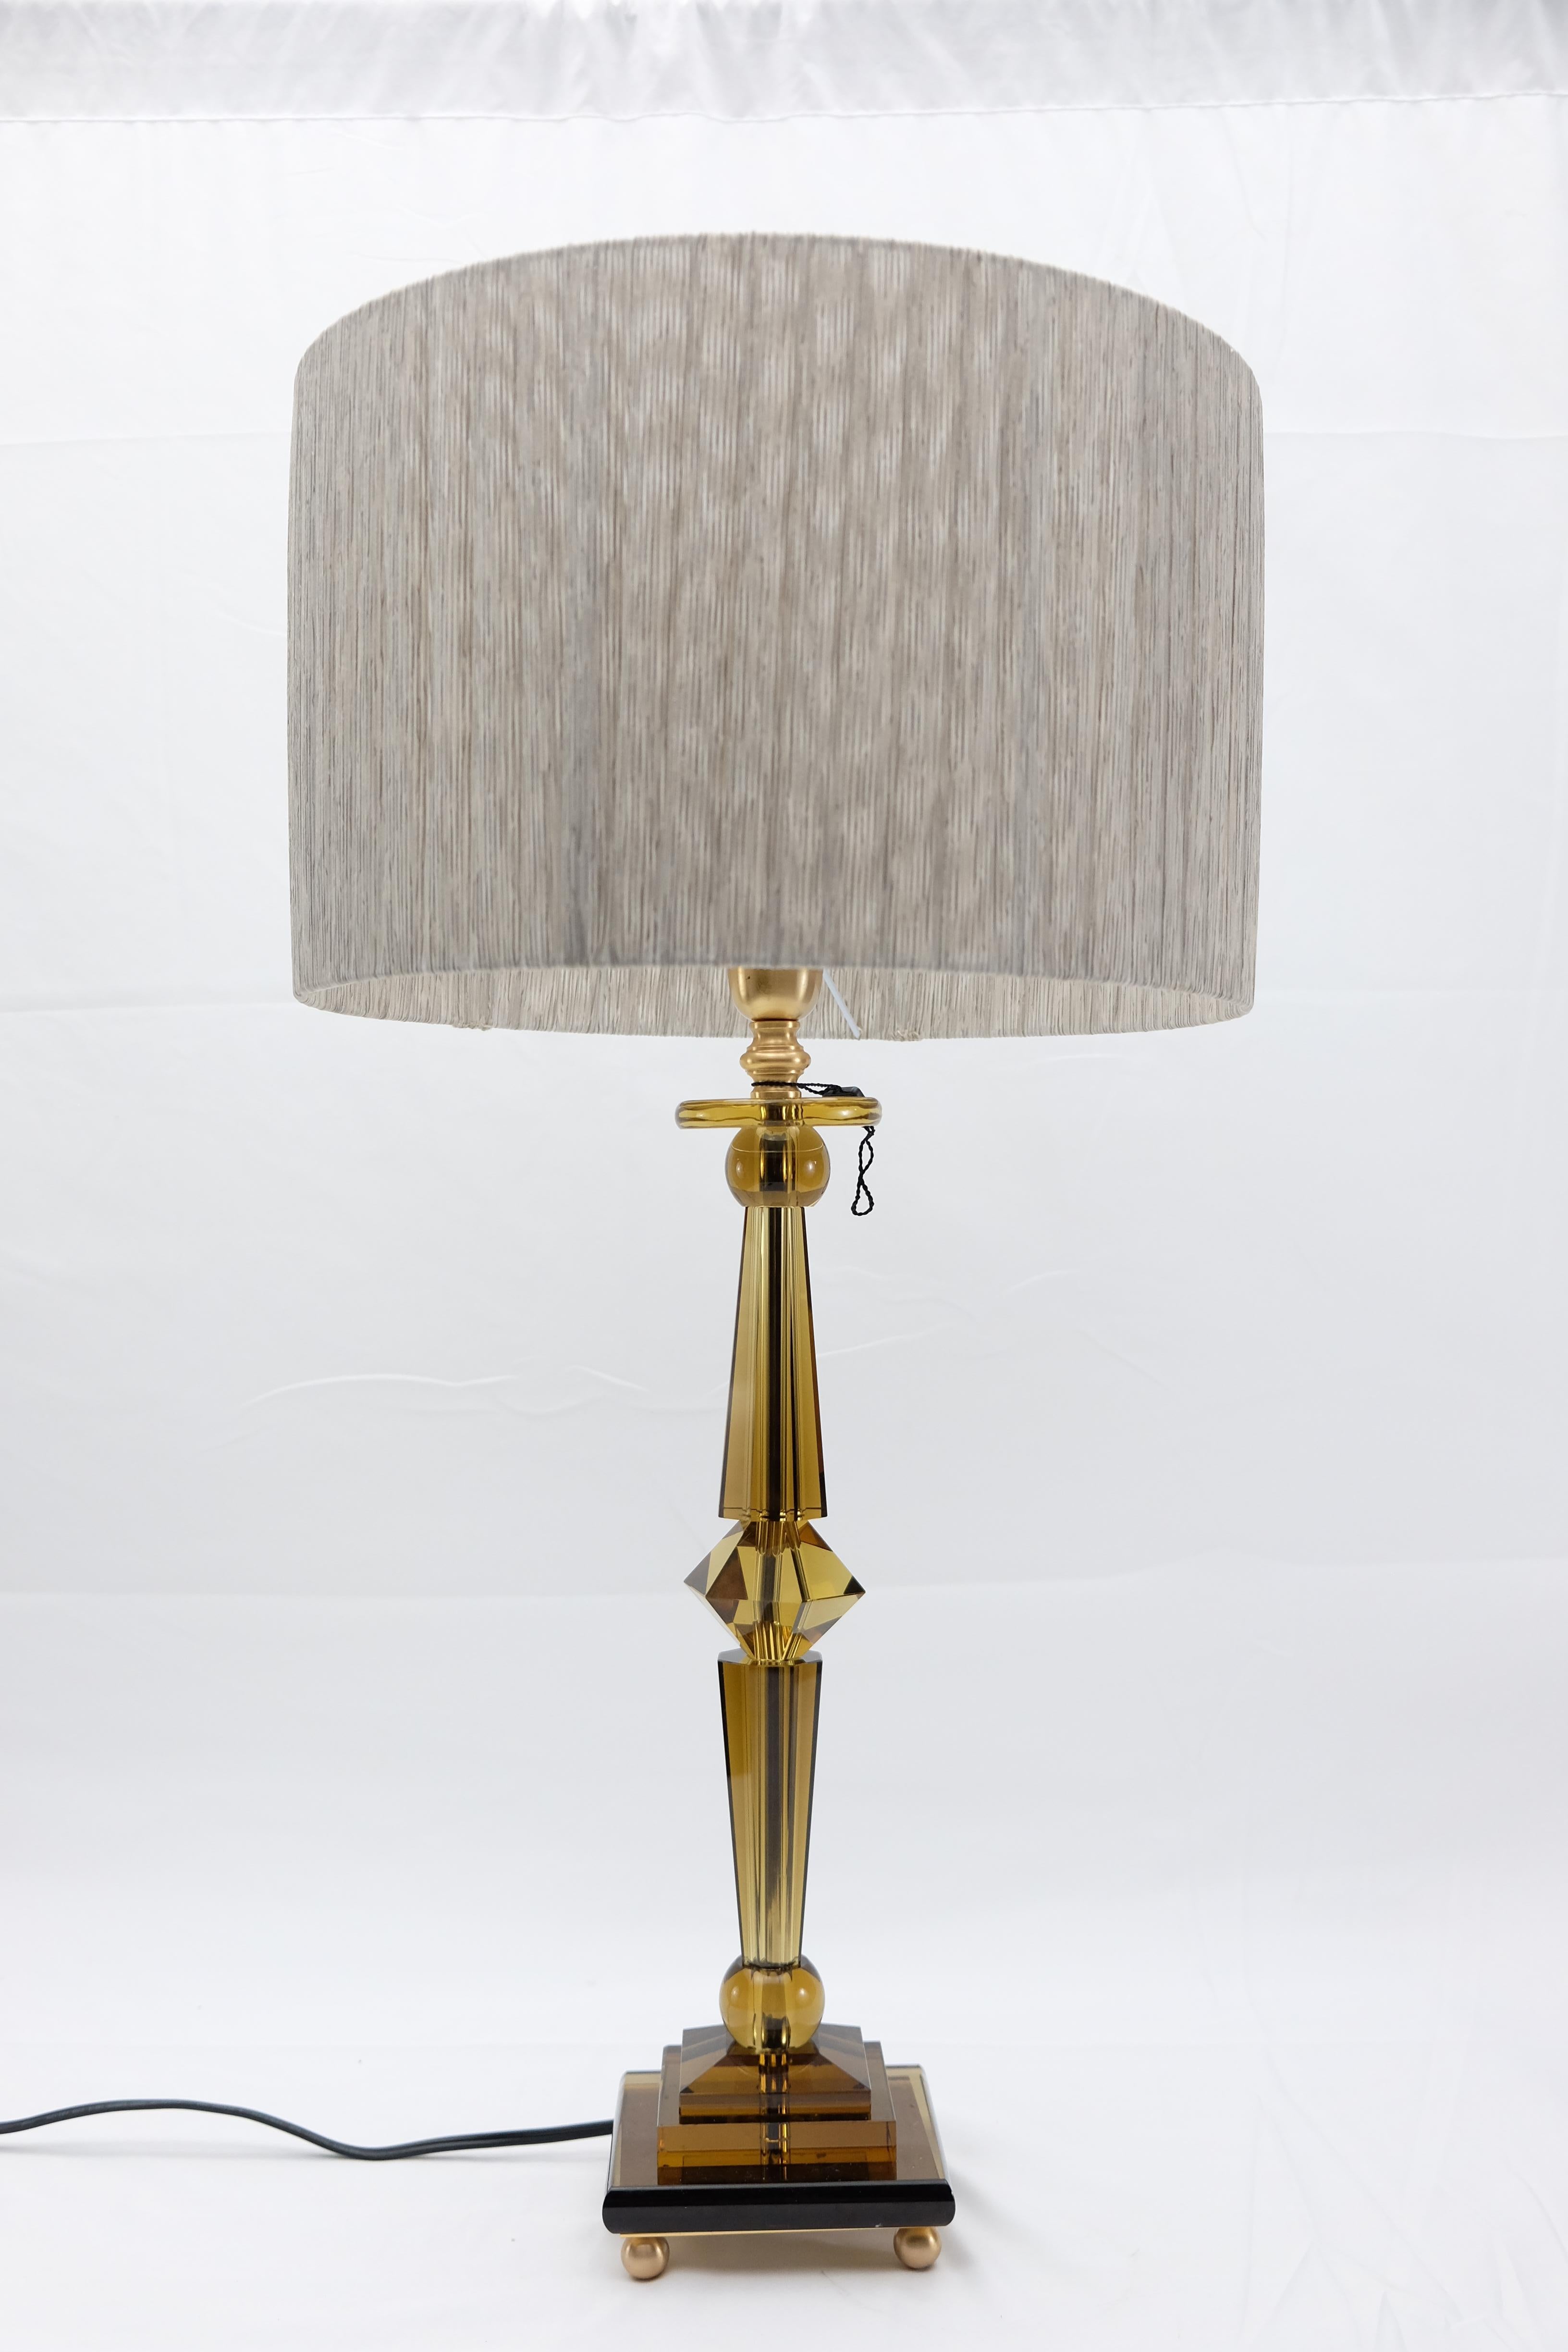 Contemporary Attilio Amato for Laudarte Srl Prisma Big Table Lamp, Pair Available For Sale